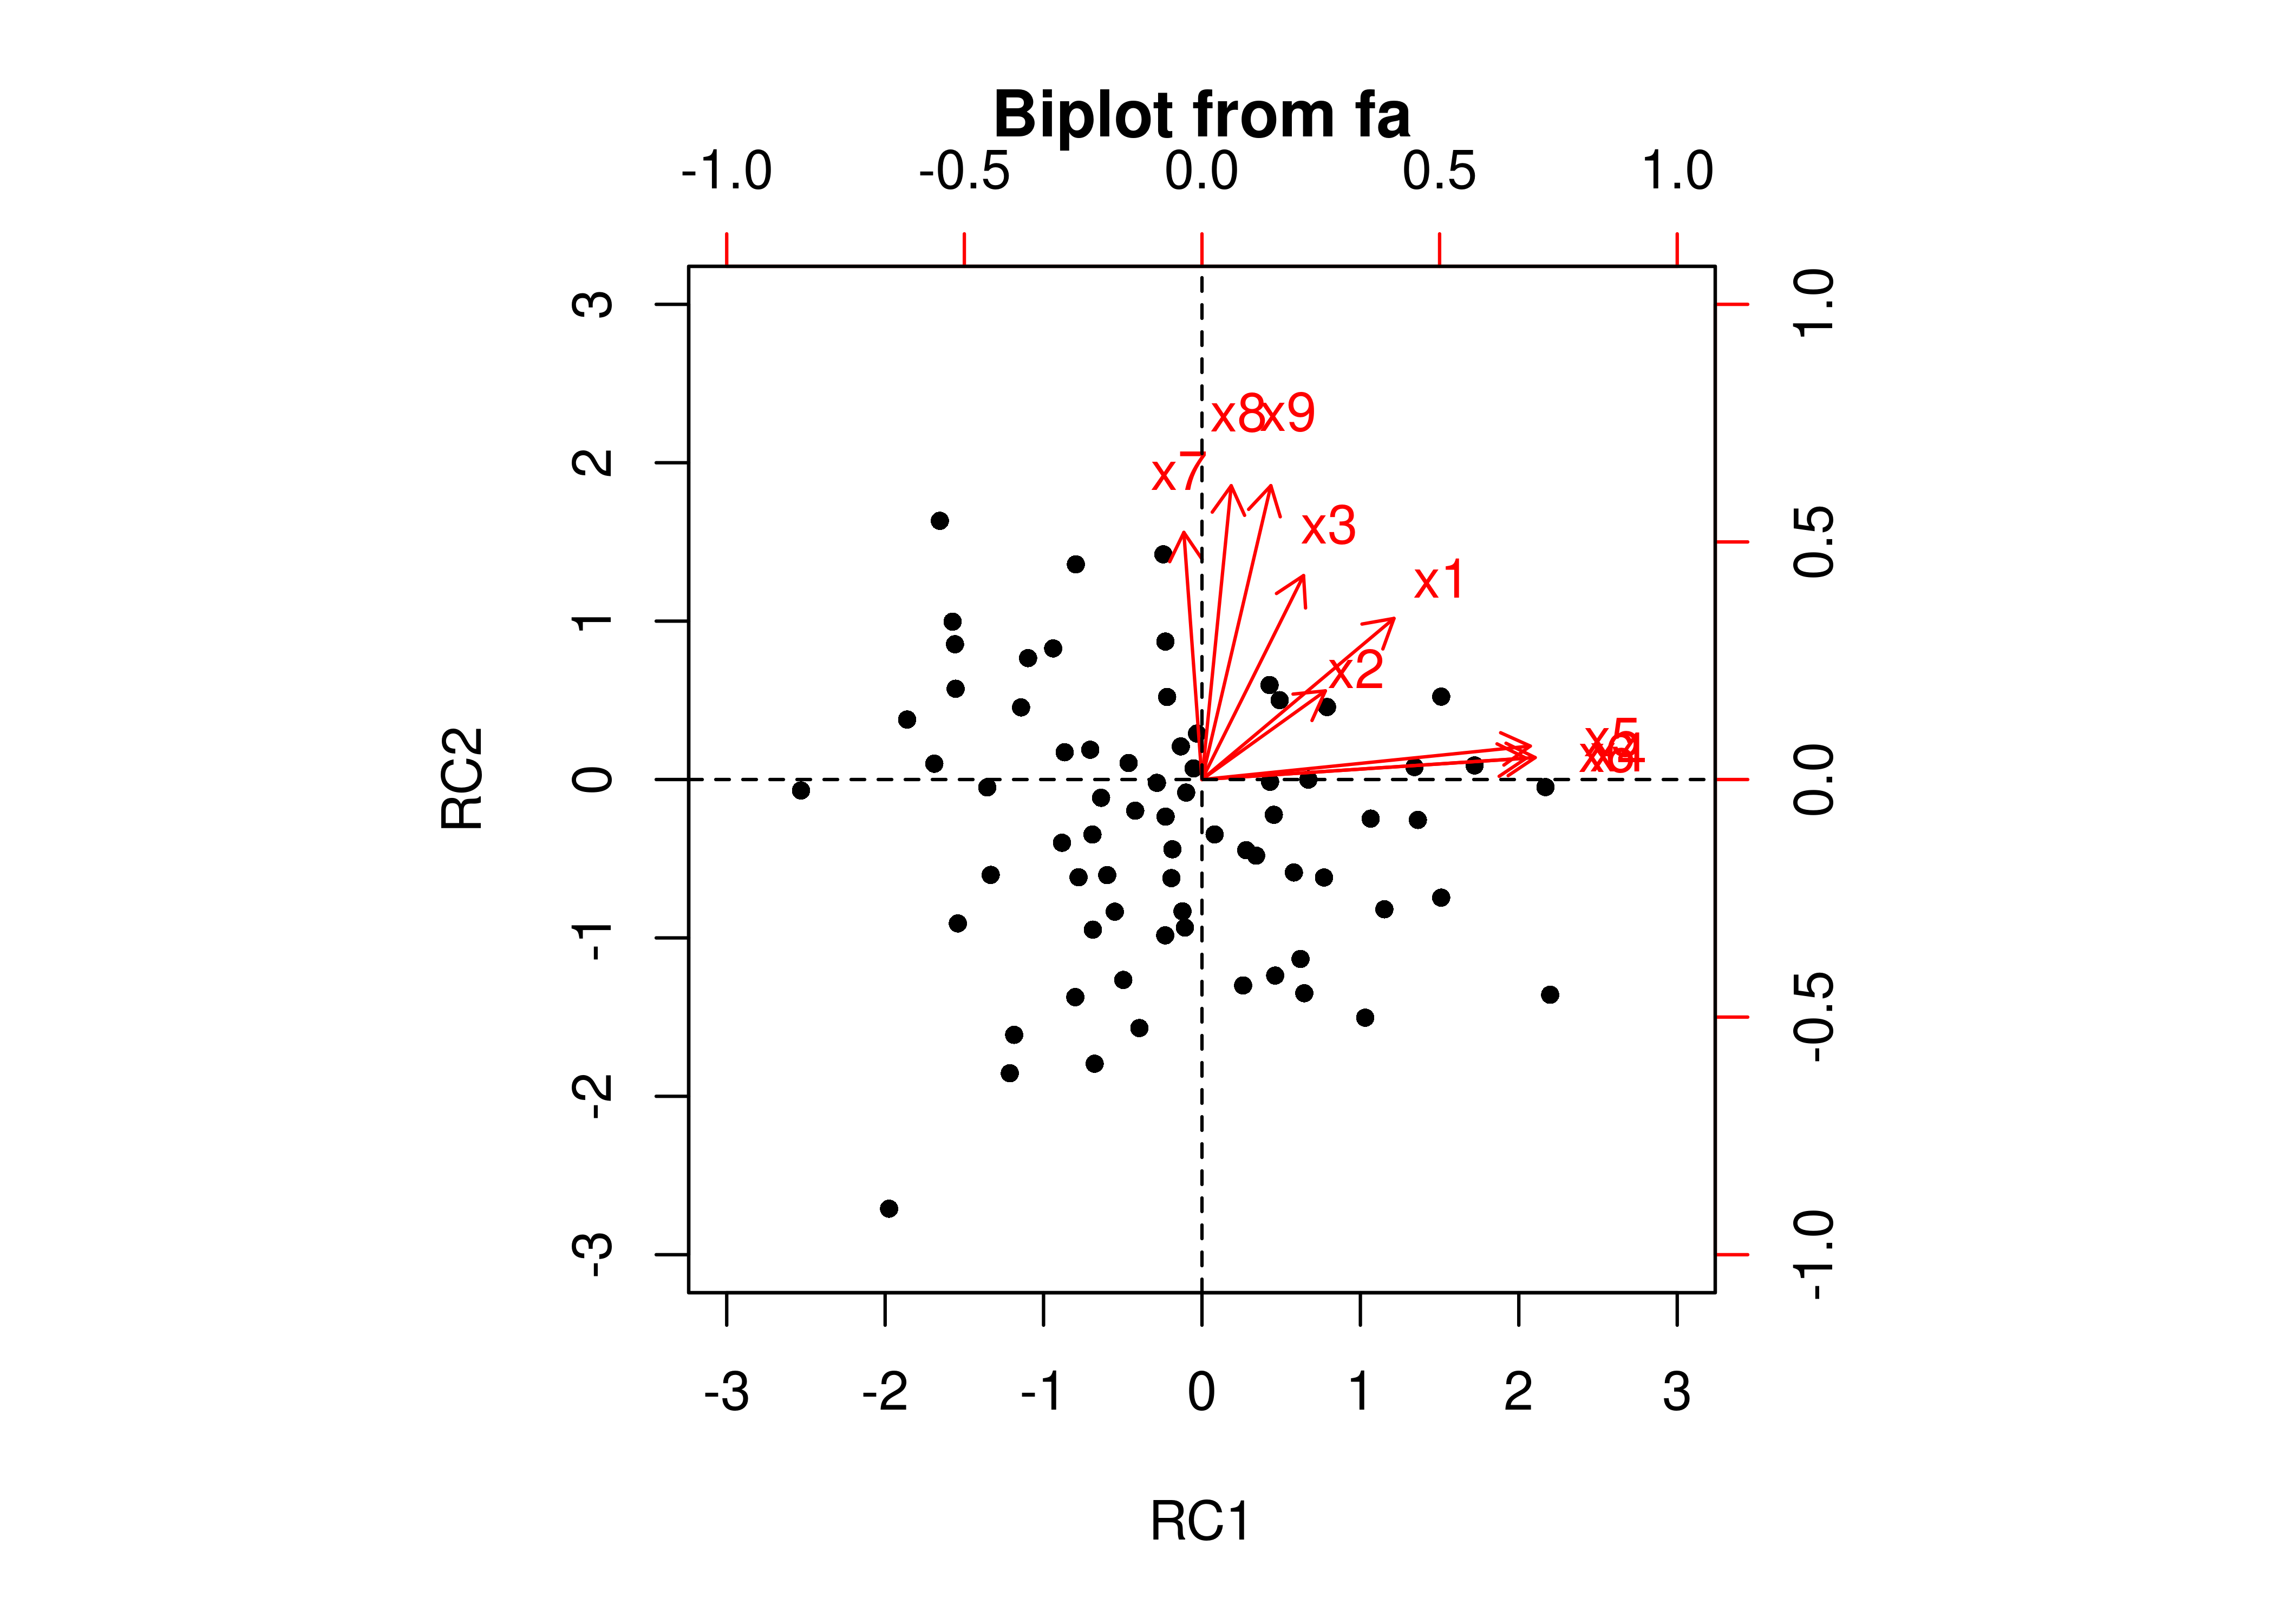 Biplot Using Orthogonal Rotation in Principal Component Analysis.